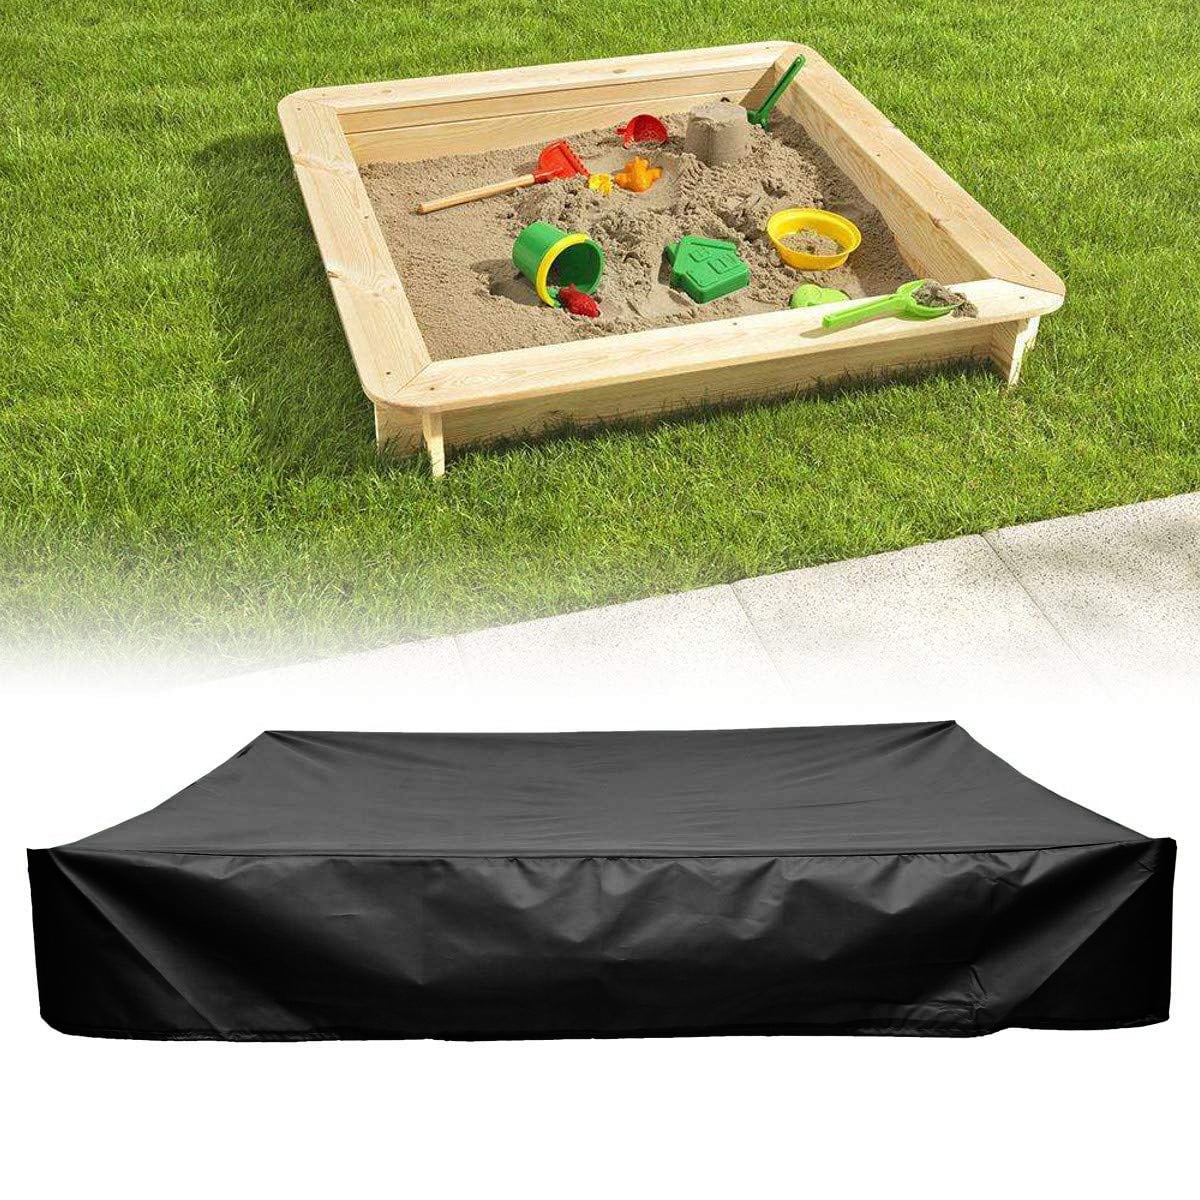 ZQEDY Sandpit Cover Sandbox Lid Square Dustproof Sandbox Lid Drawstring Waterproof Sandbox Pool Cover